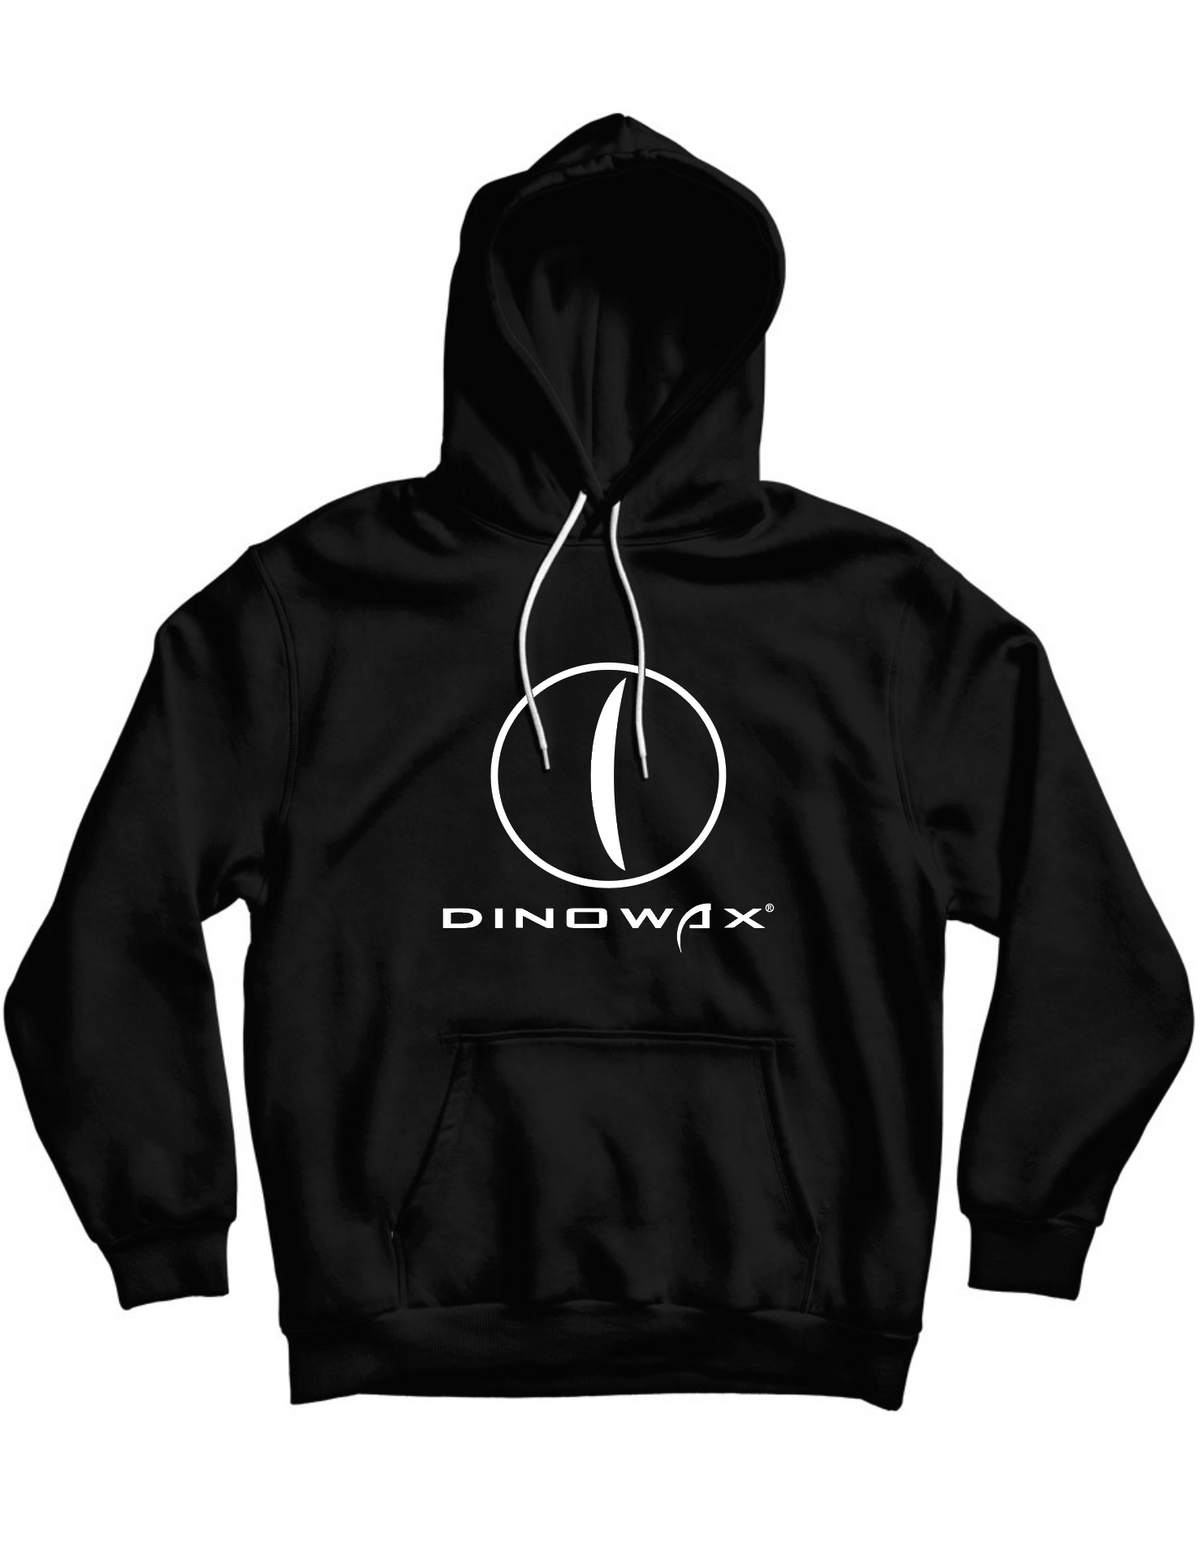 Dinowax Black Pullover Hoodie